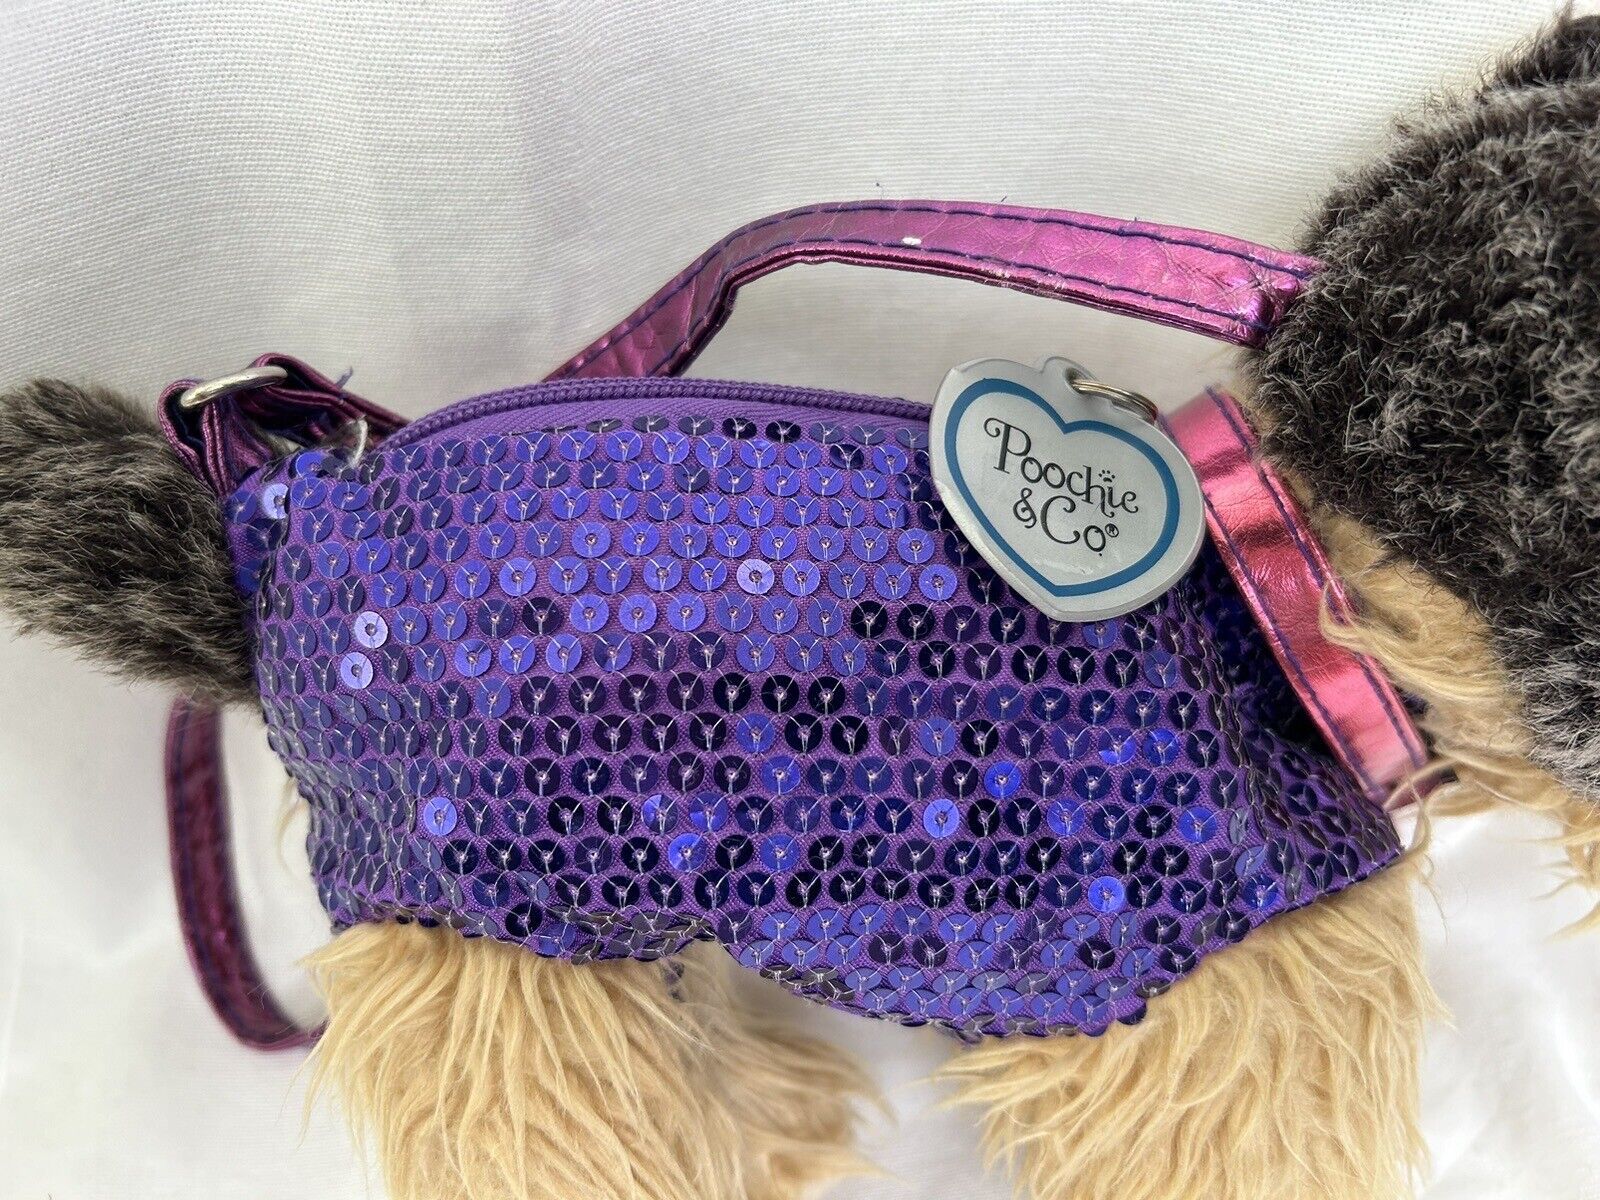 Yorkshire Terrier Dog Plush Purse Poochie & Co Zipped Pocket Purple Sequins Bag